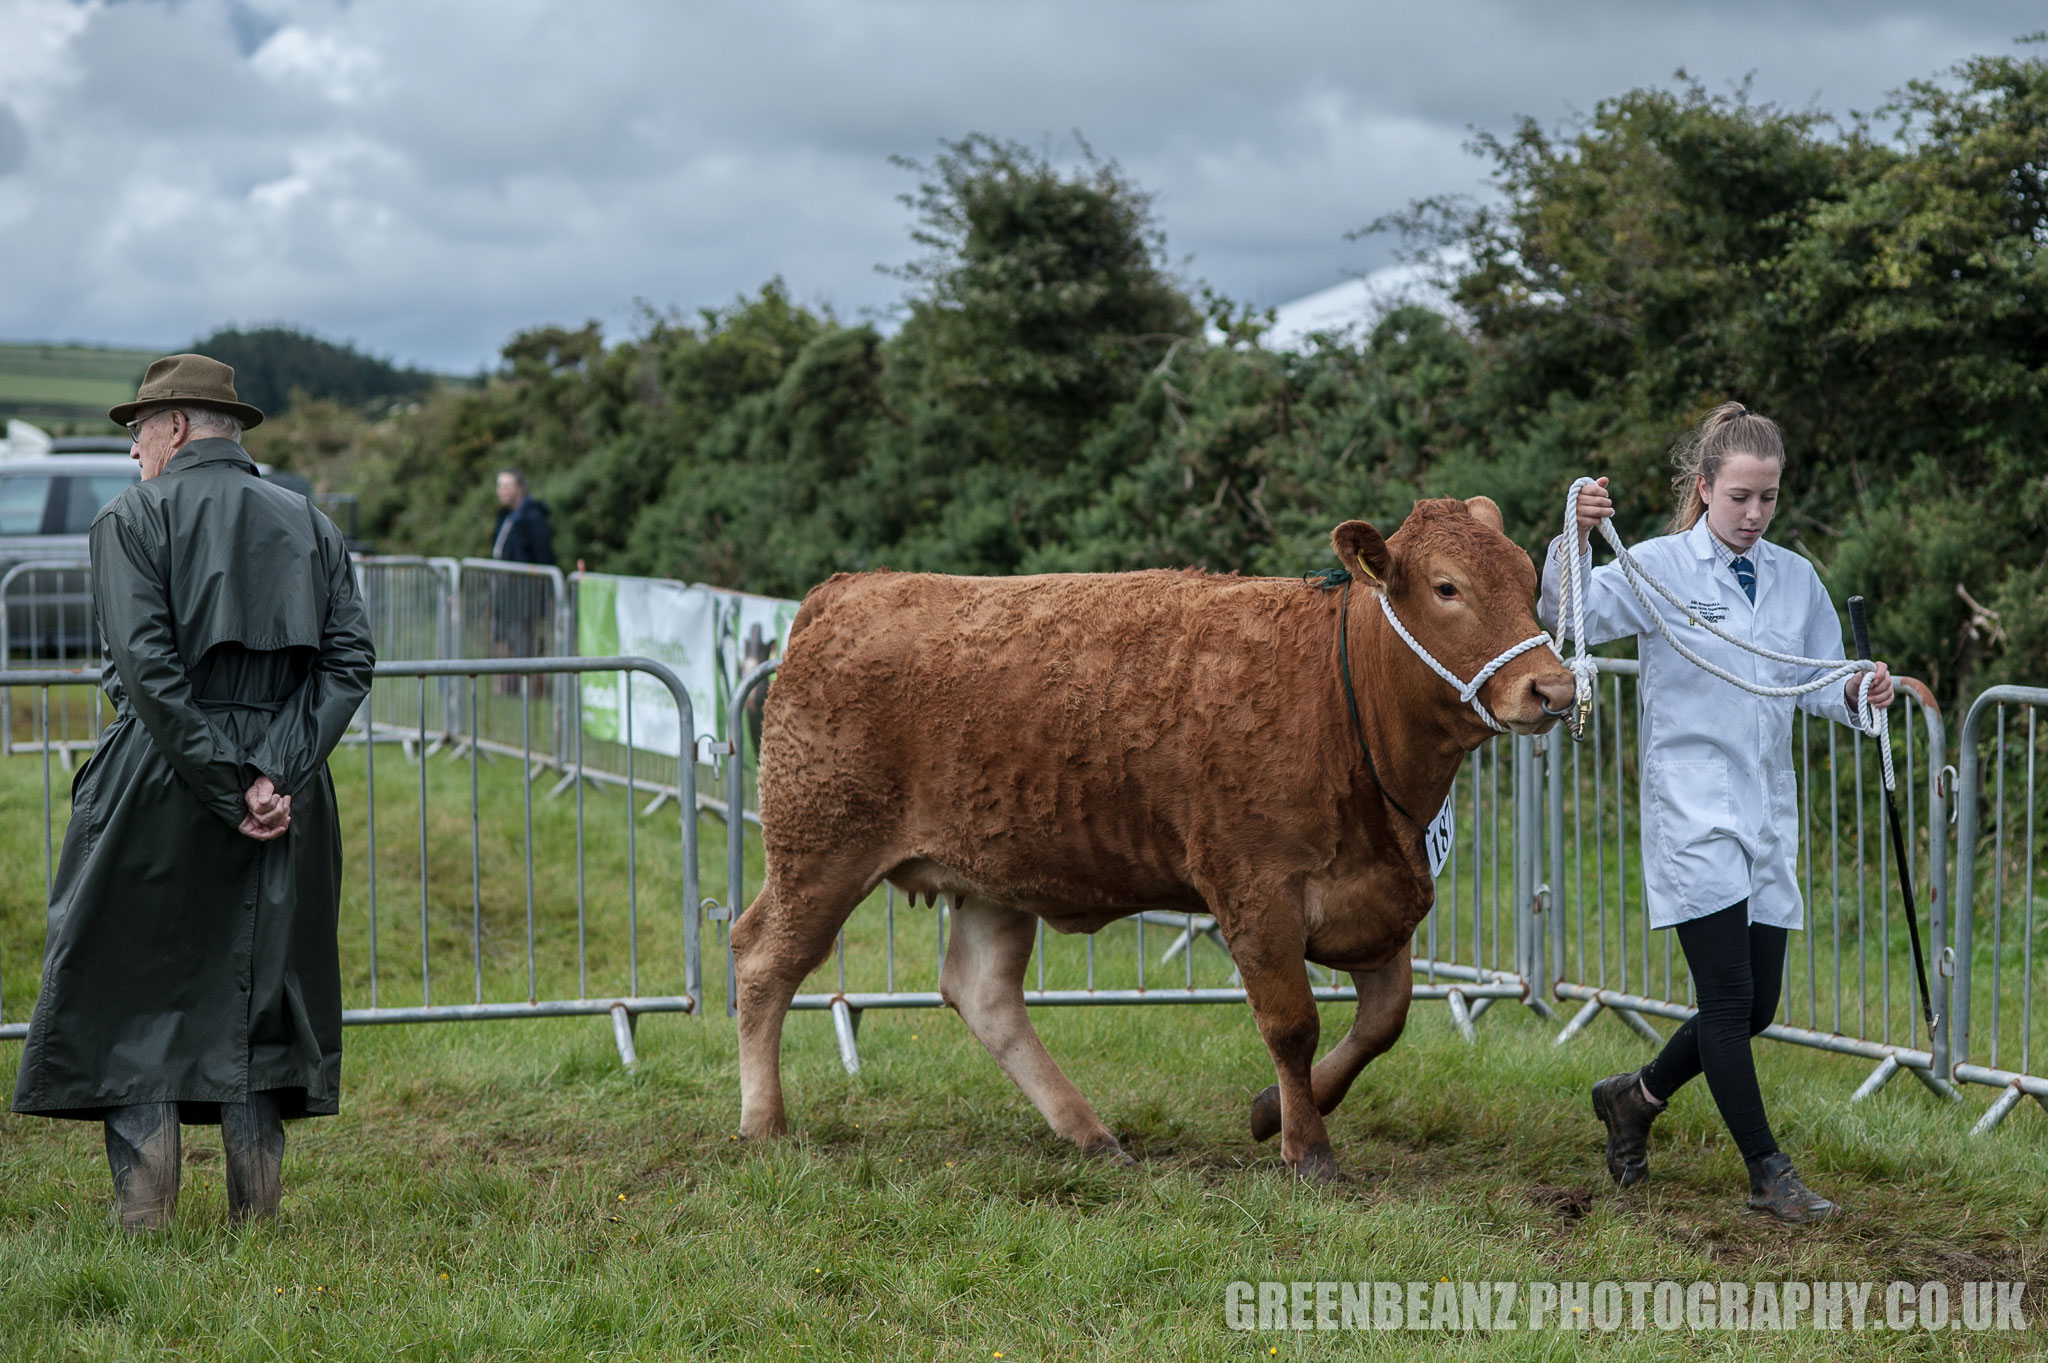  Cattle at Cornish farm show UK Animal Photograohy